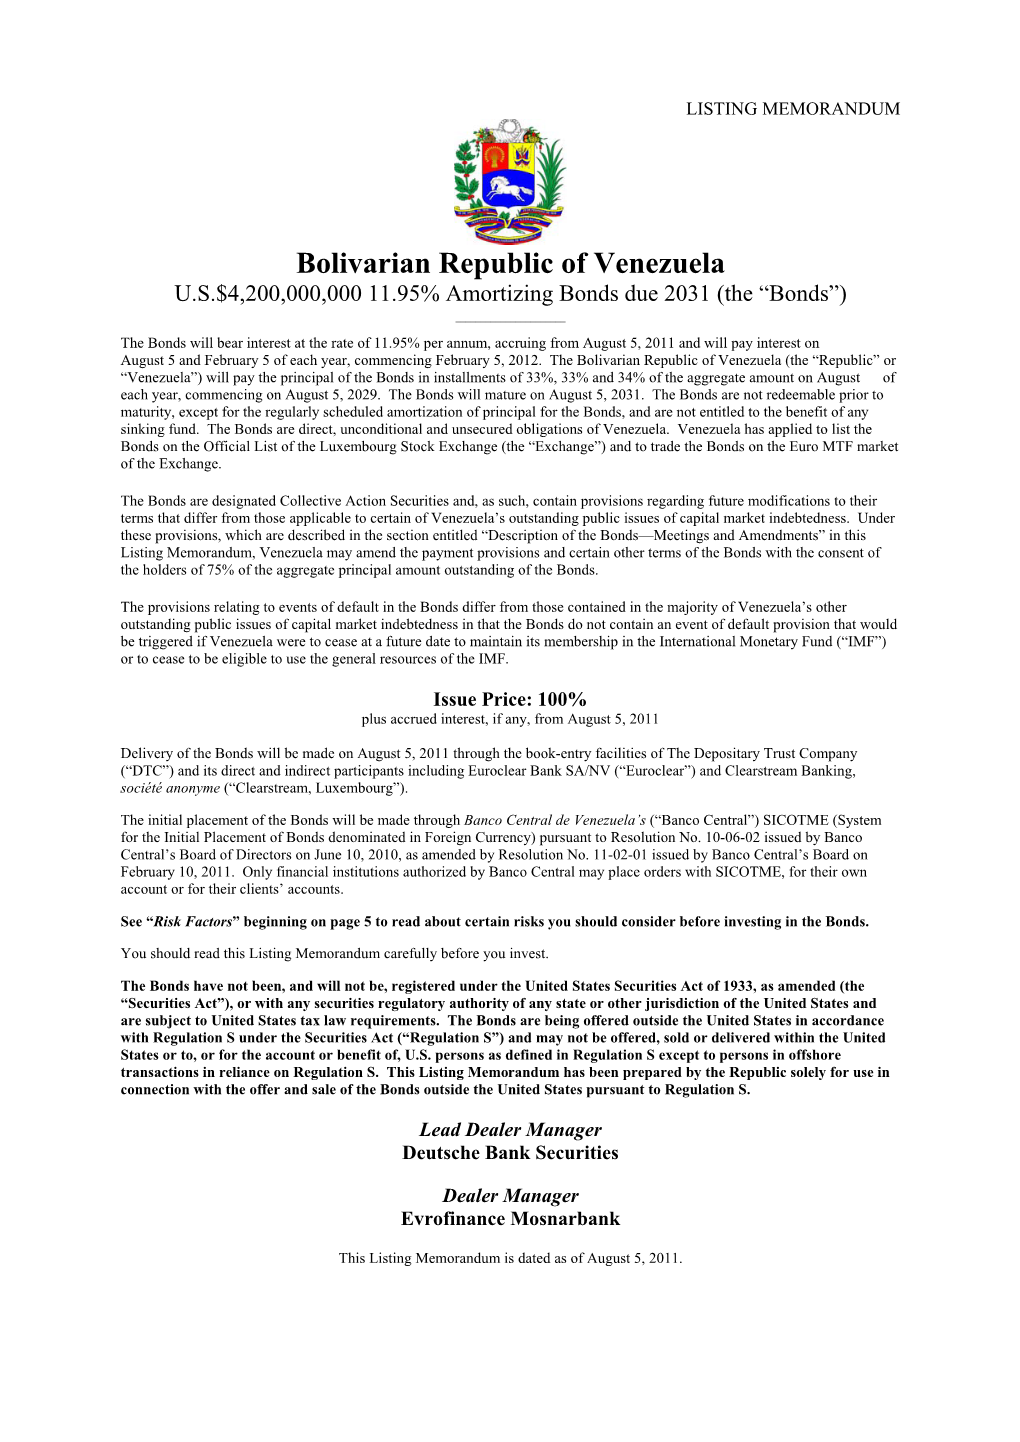 Bolivarian Republic of Venezuela U.S.$4,200,000,000 11.95% Amortizing Bonds Due 2031 (The “Bonds”) ______